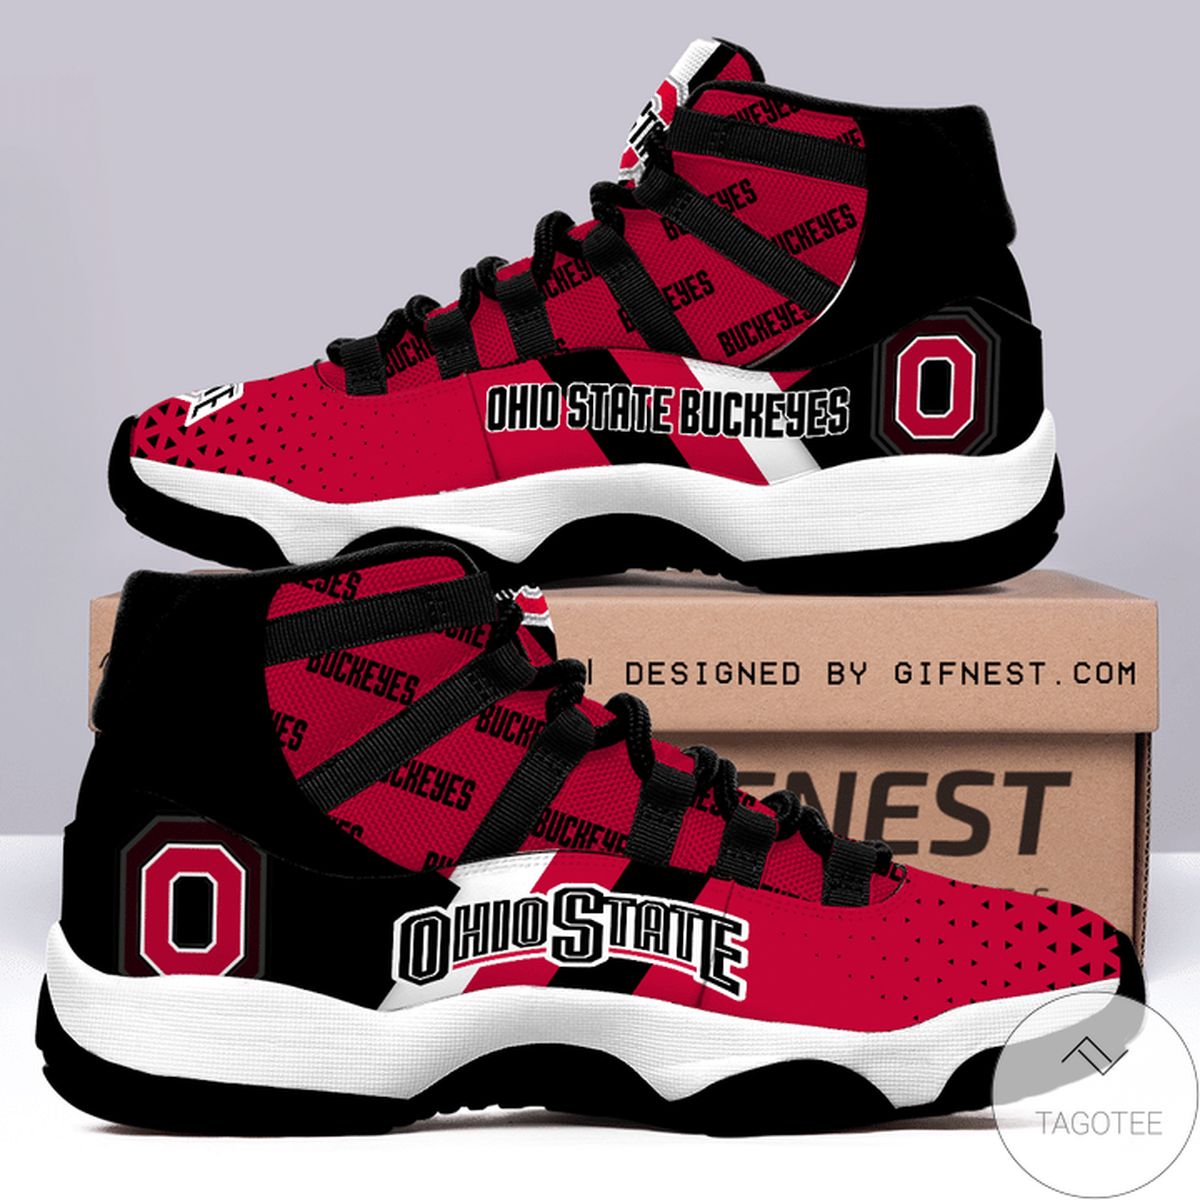 Ohio State Buckeyes Air Jordan 11 Shoes